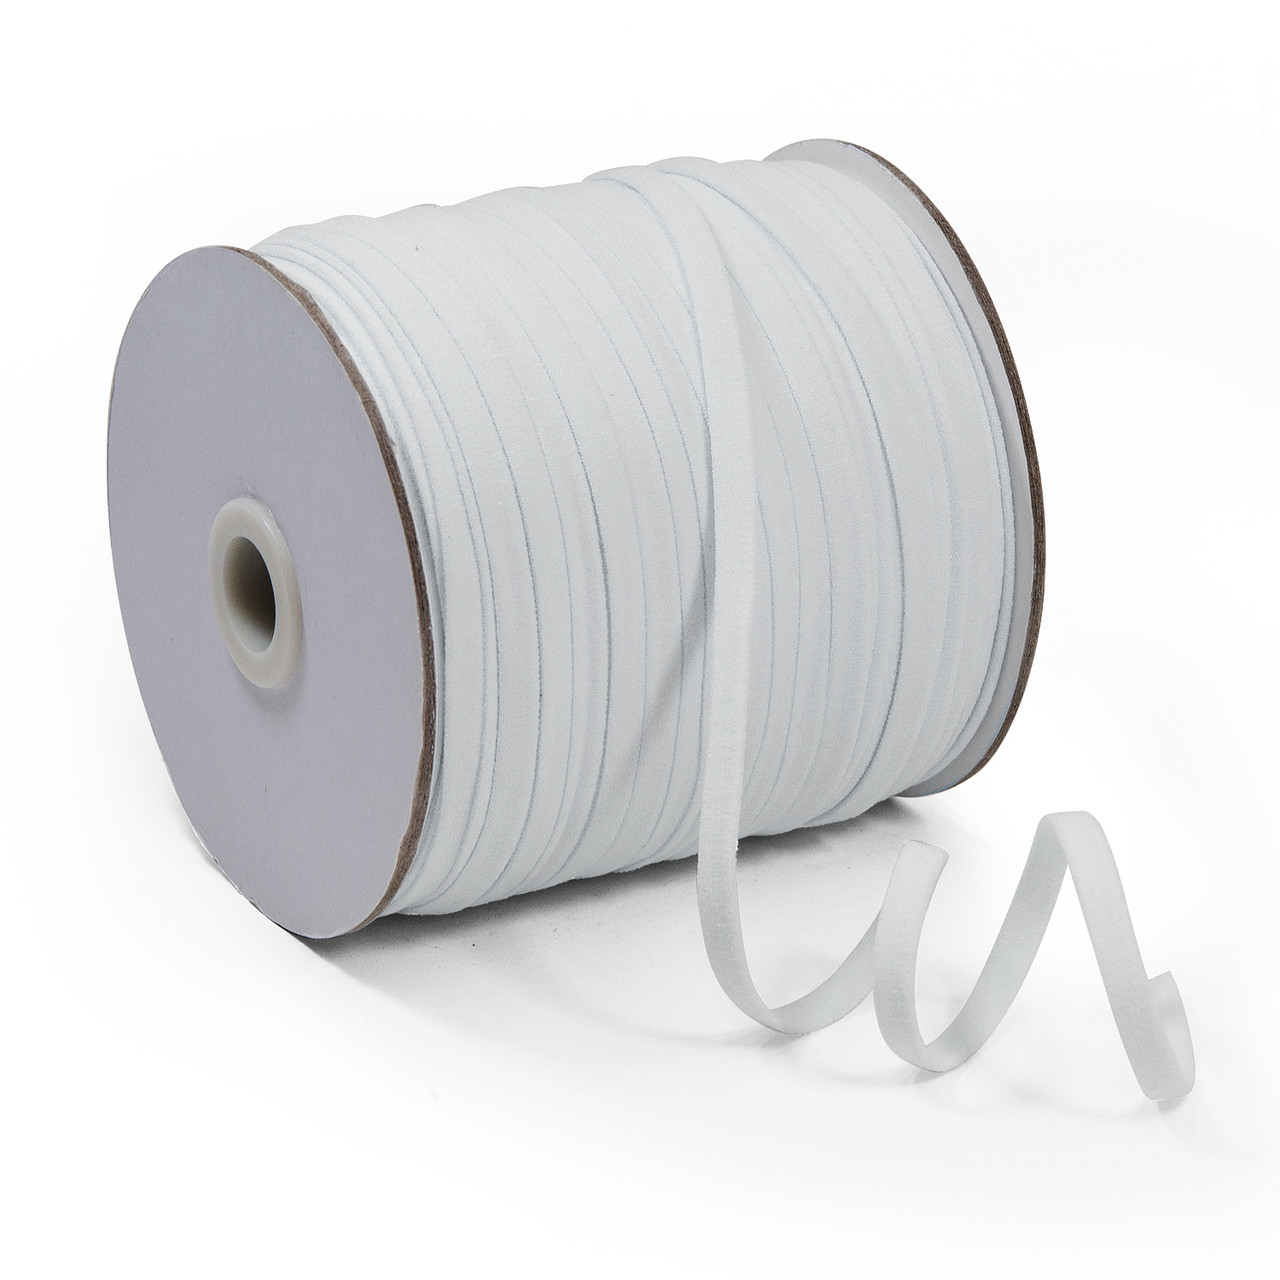 1Roll Balck&White Flat Elastic Fibre Cord Stretch String Crafting Thread  4~14mm